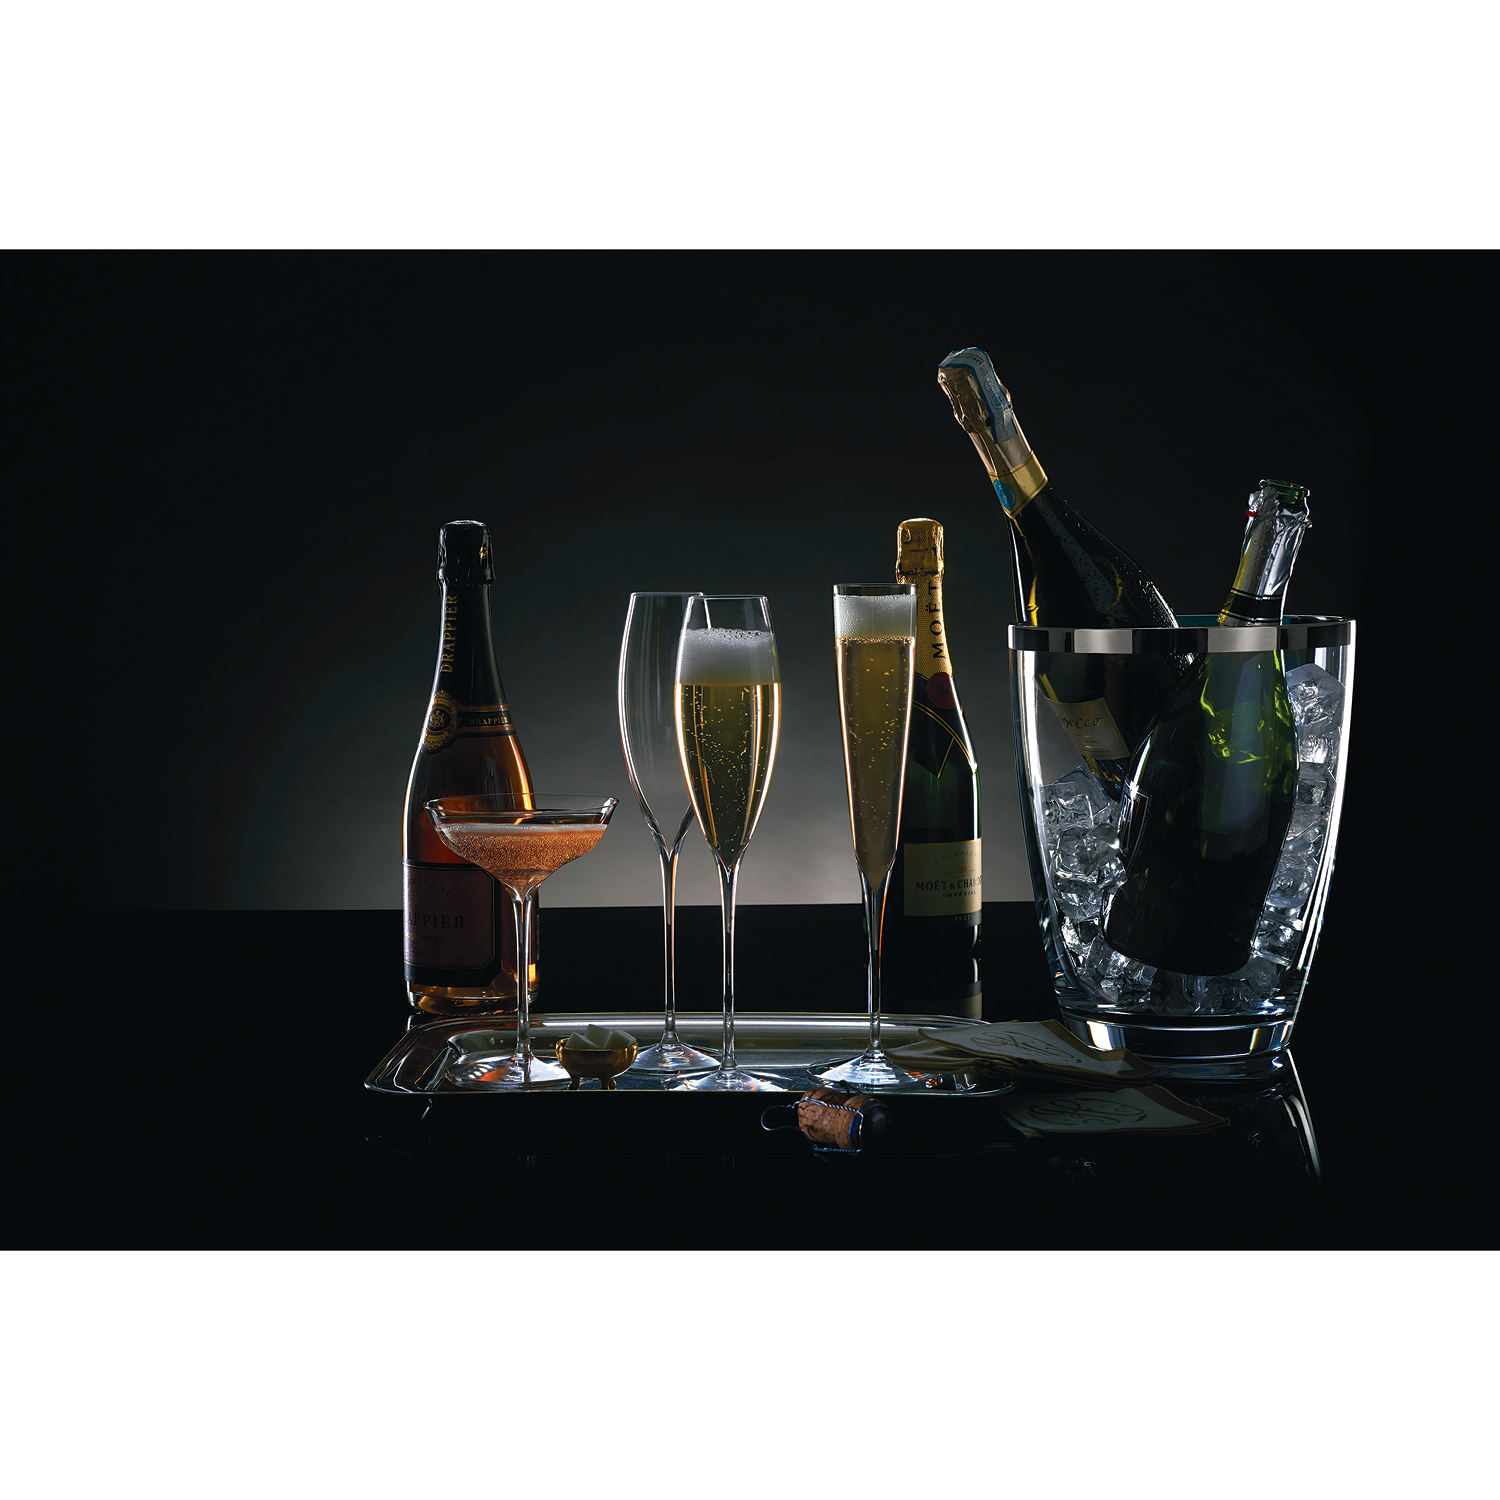 Elegance Wine Glass Bordeaux Set Of 2